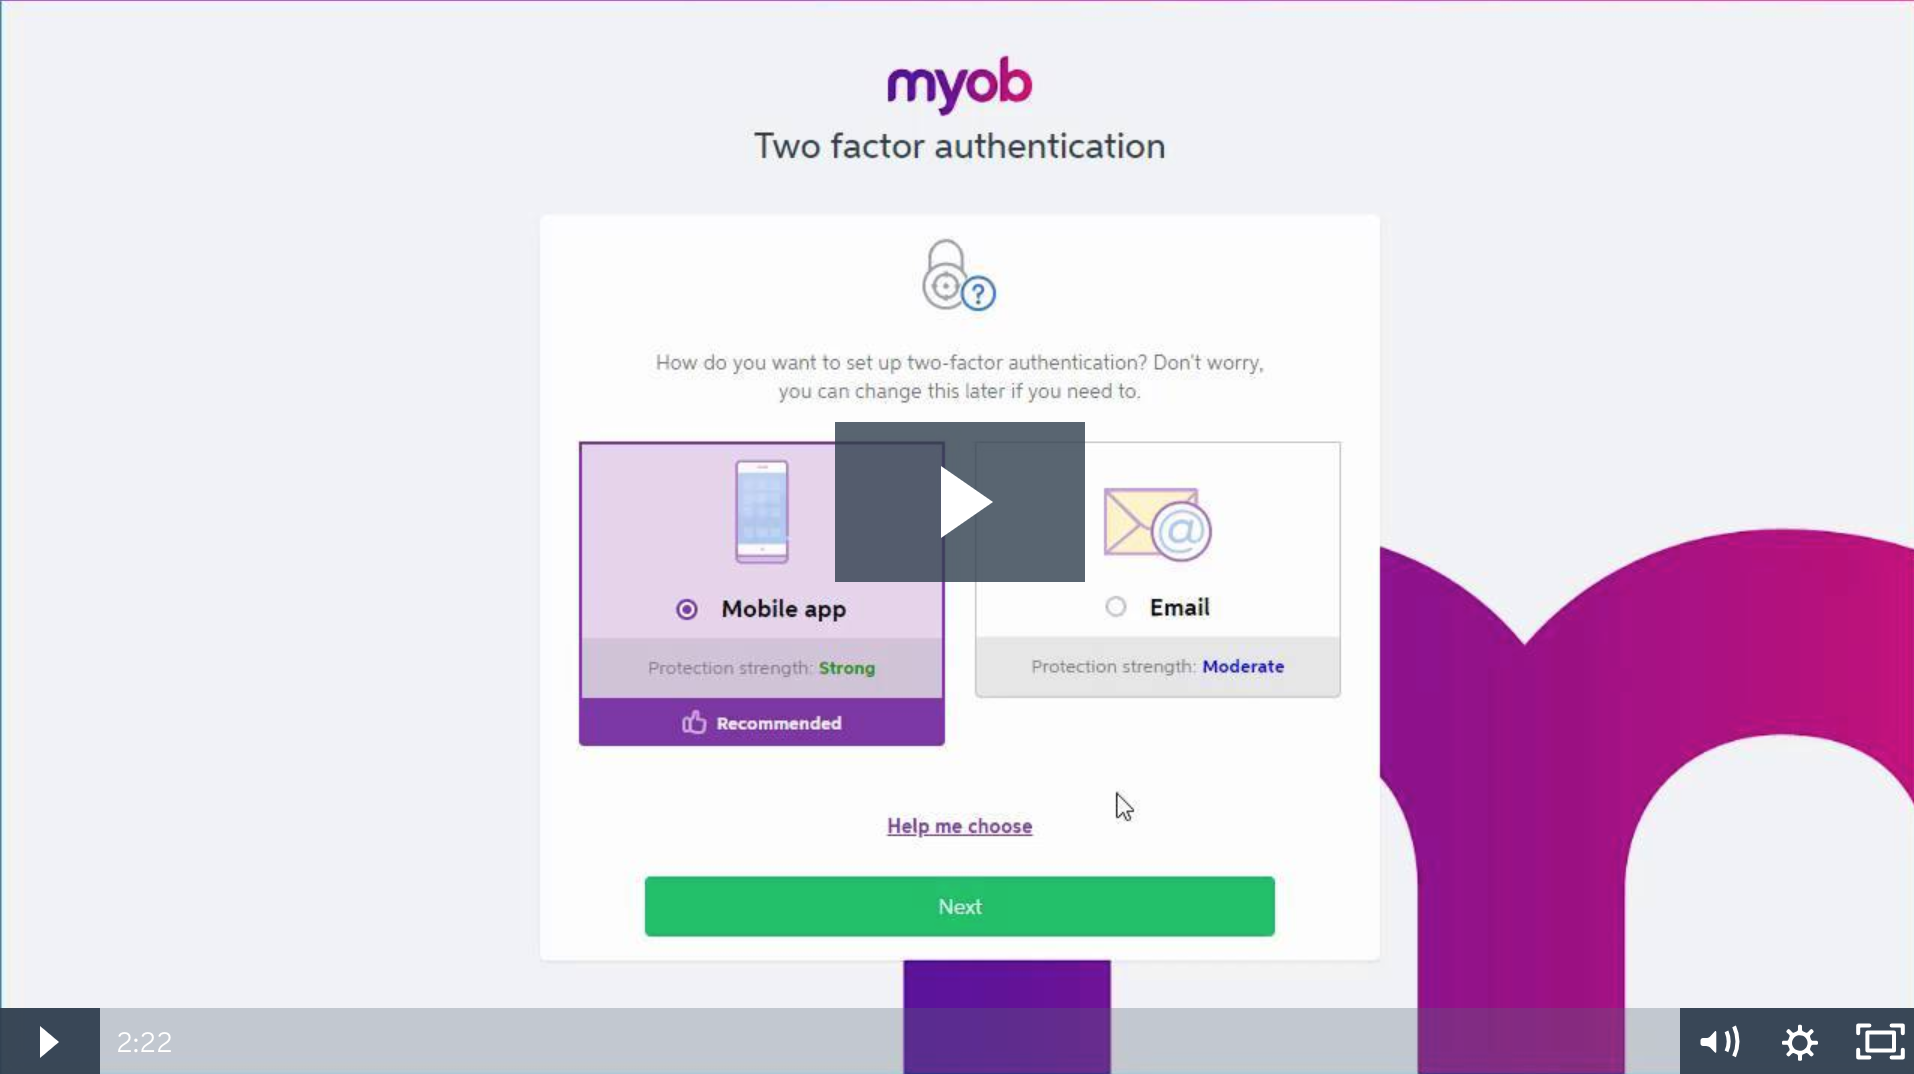 MYOB Advanced 2FA Video